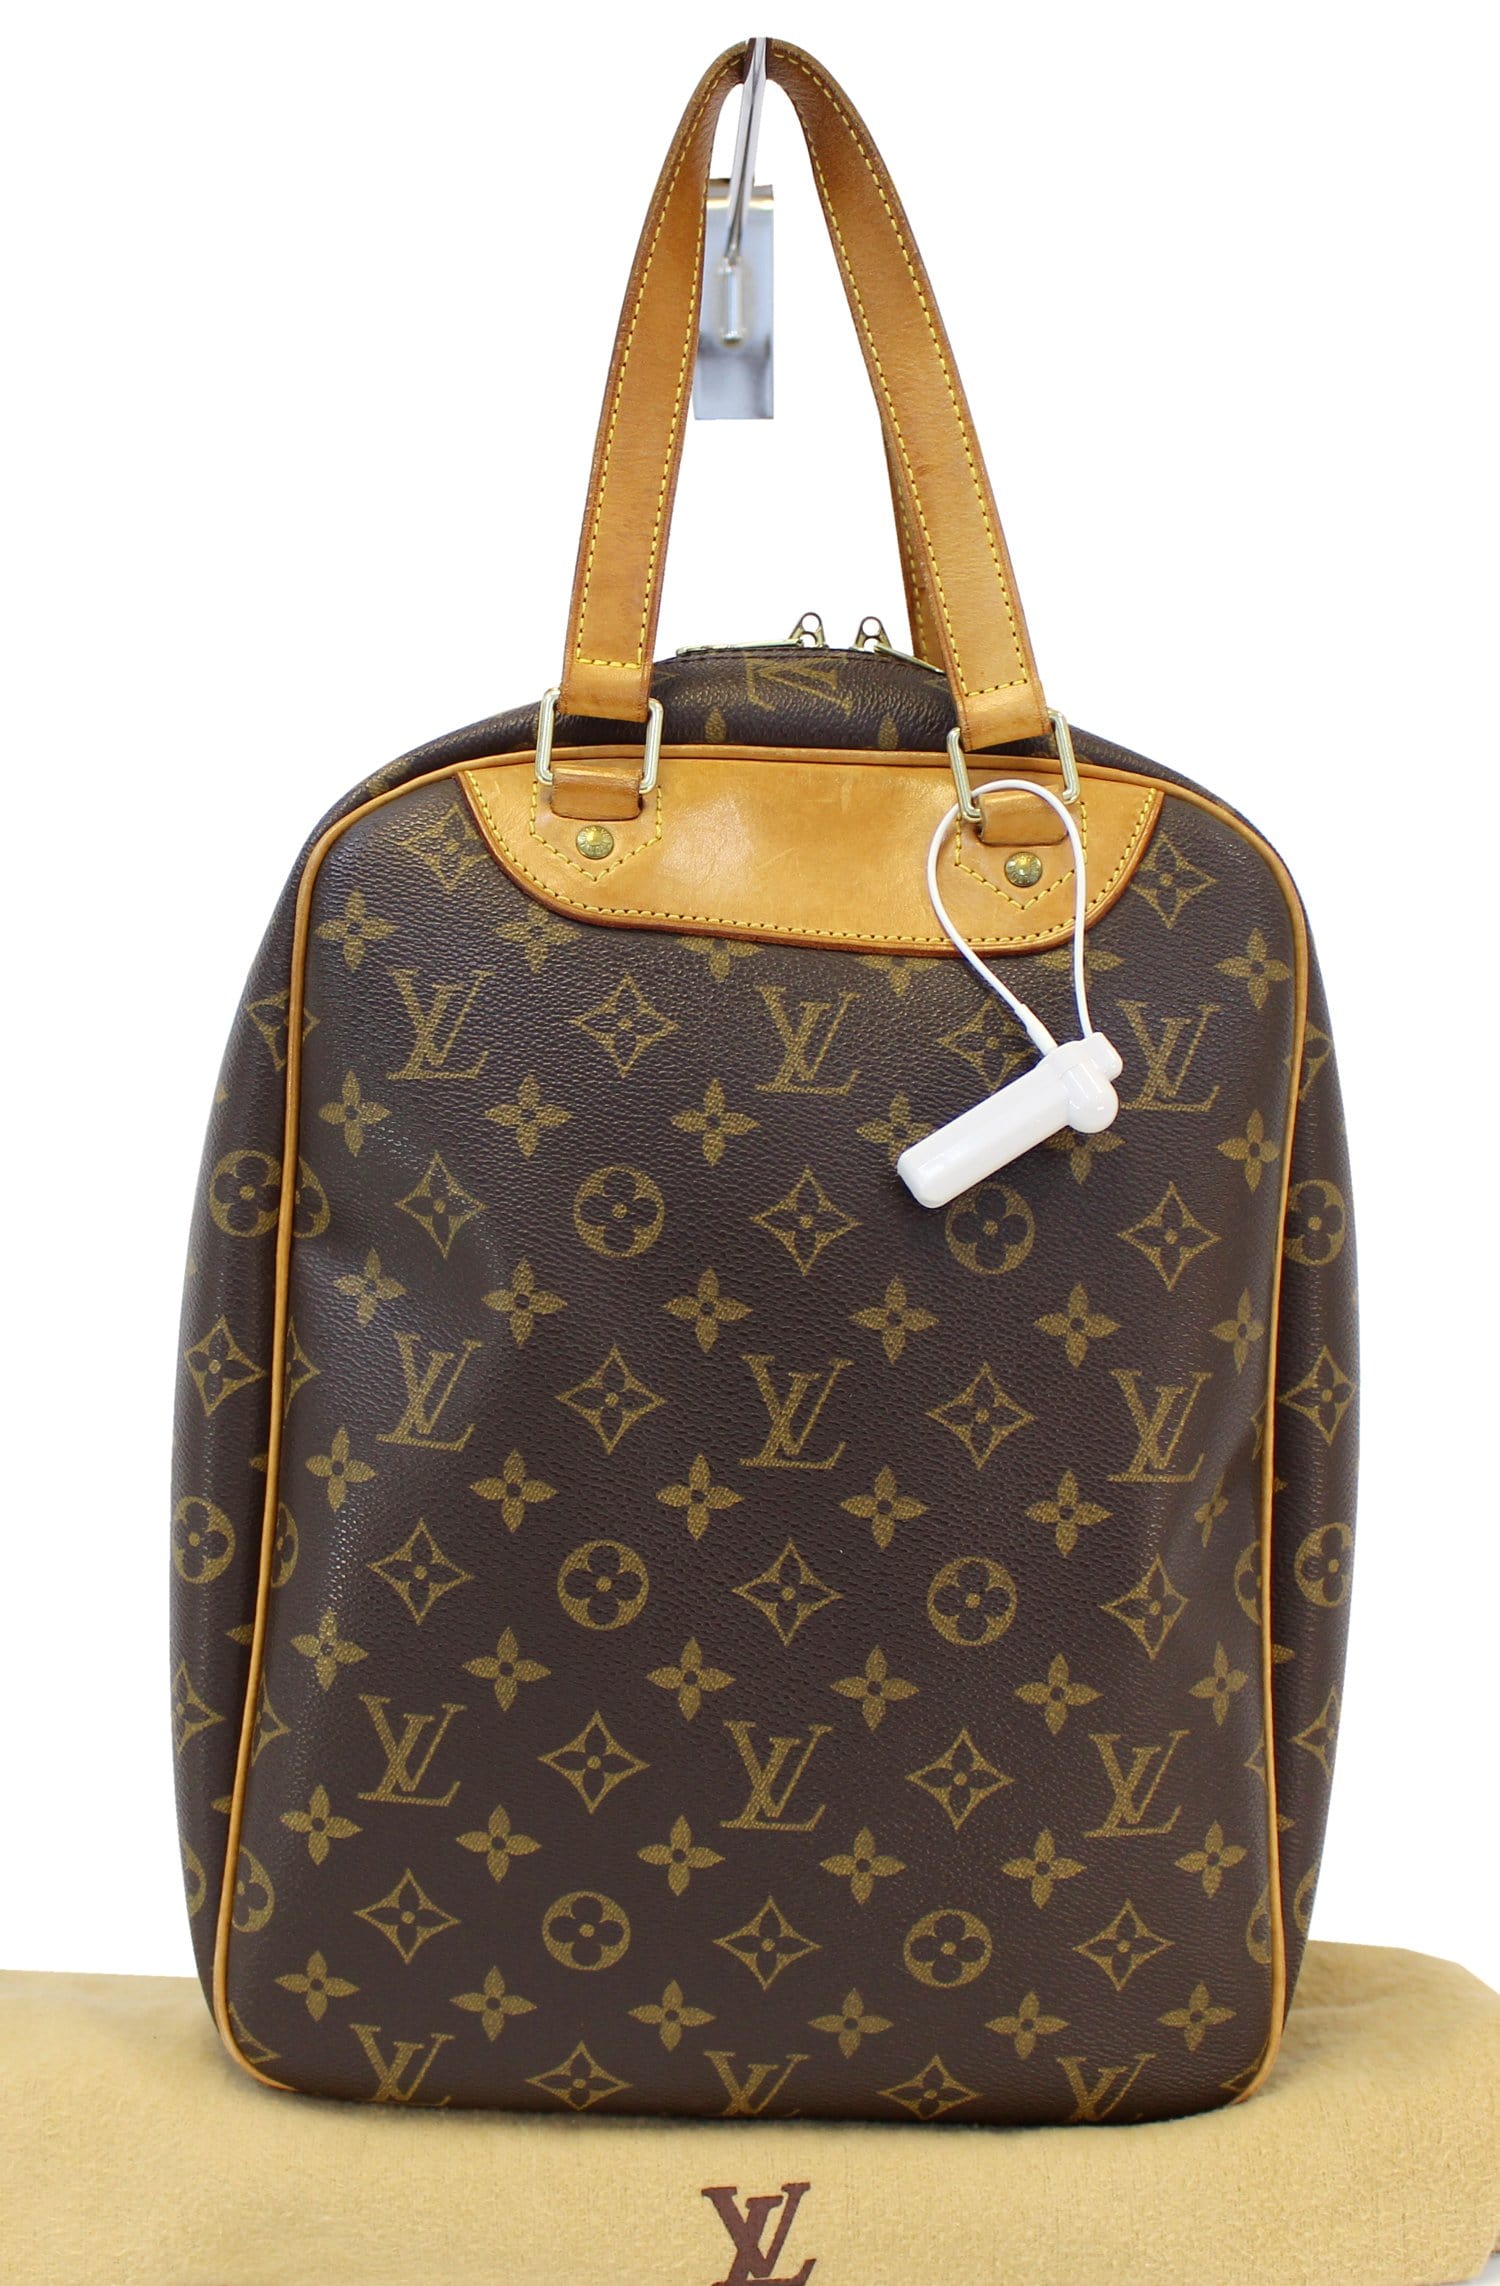 The Monogram takes Manhattan - Louis Vuitton's new it bag arrives - Duty  Free Hunter